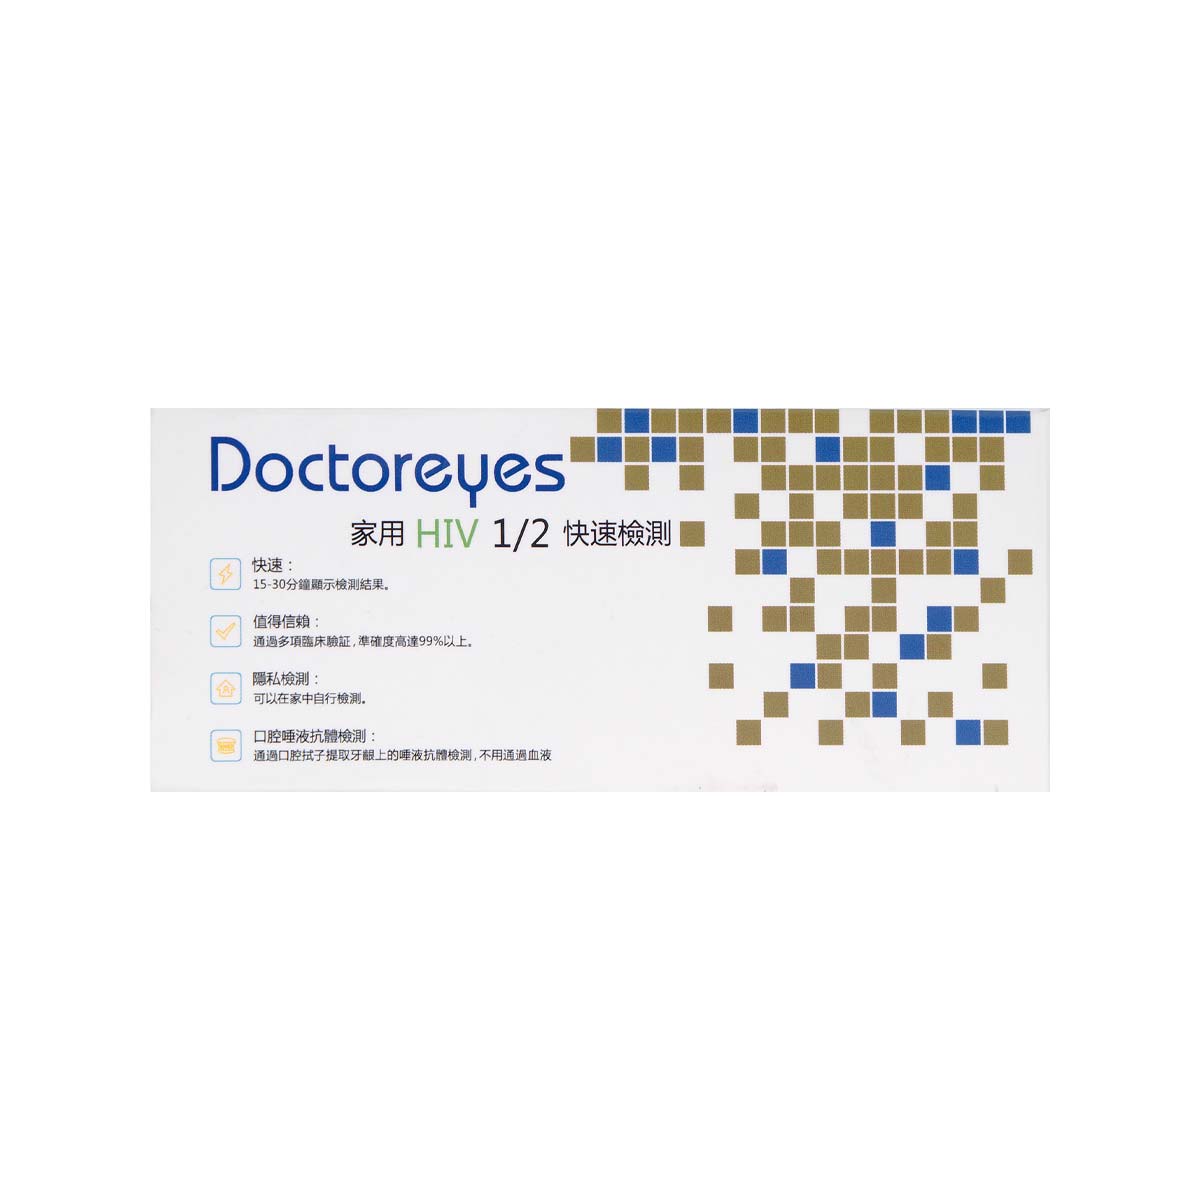 Doctoreyes 家用爱滋病病毒 (HIV) 1/2 快速检测 口腔黏液检验器-p_2